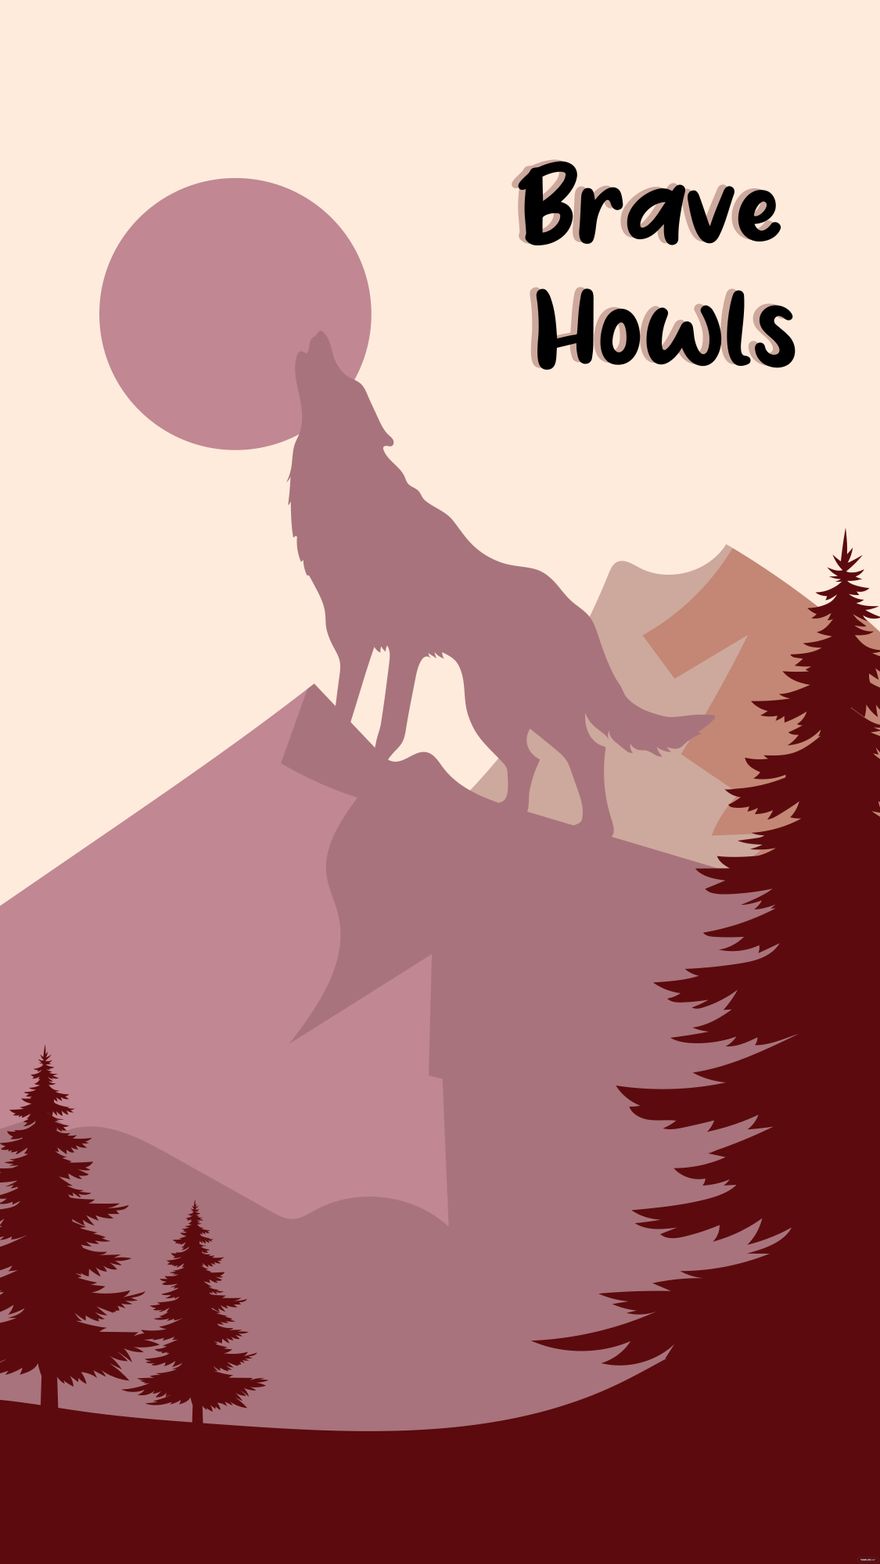 Wolf Phone Wallpaper in Illustrator, EPS, SVG, JPG, PNG